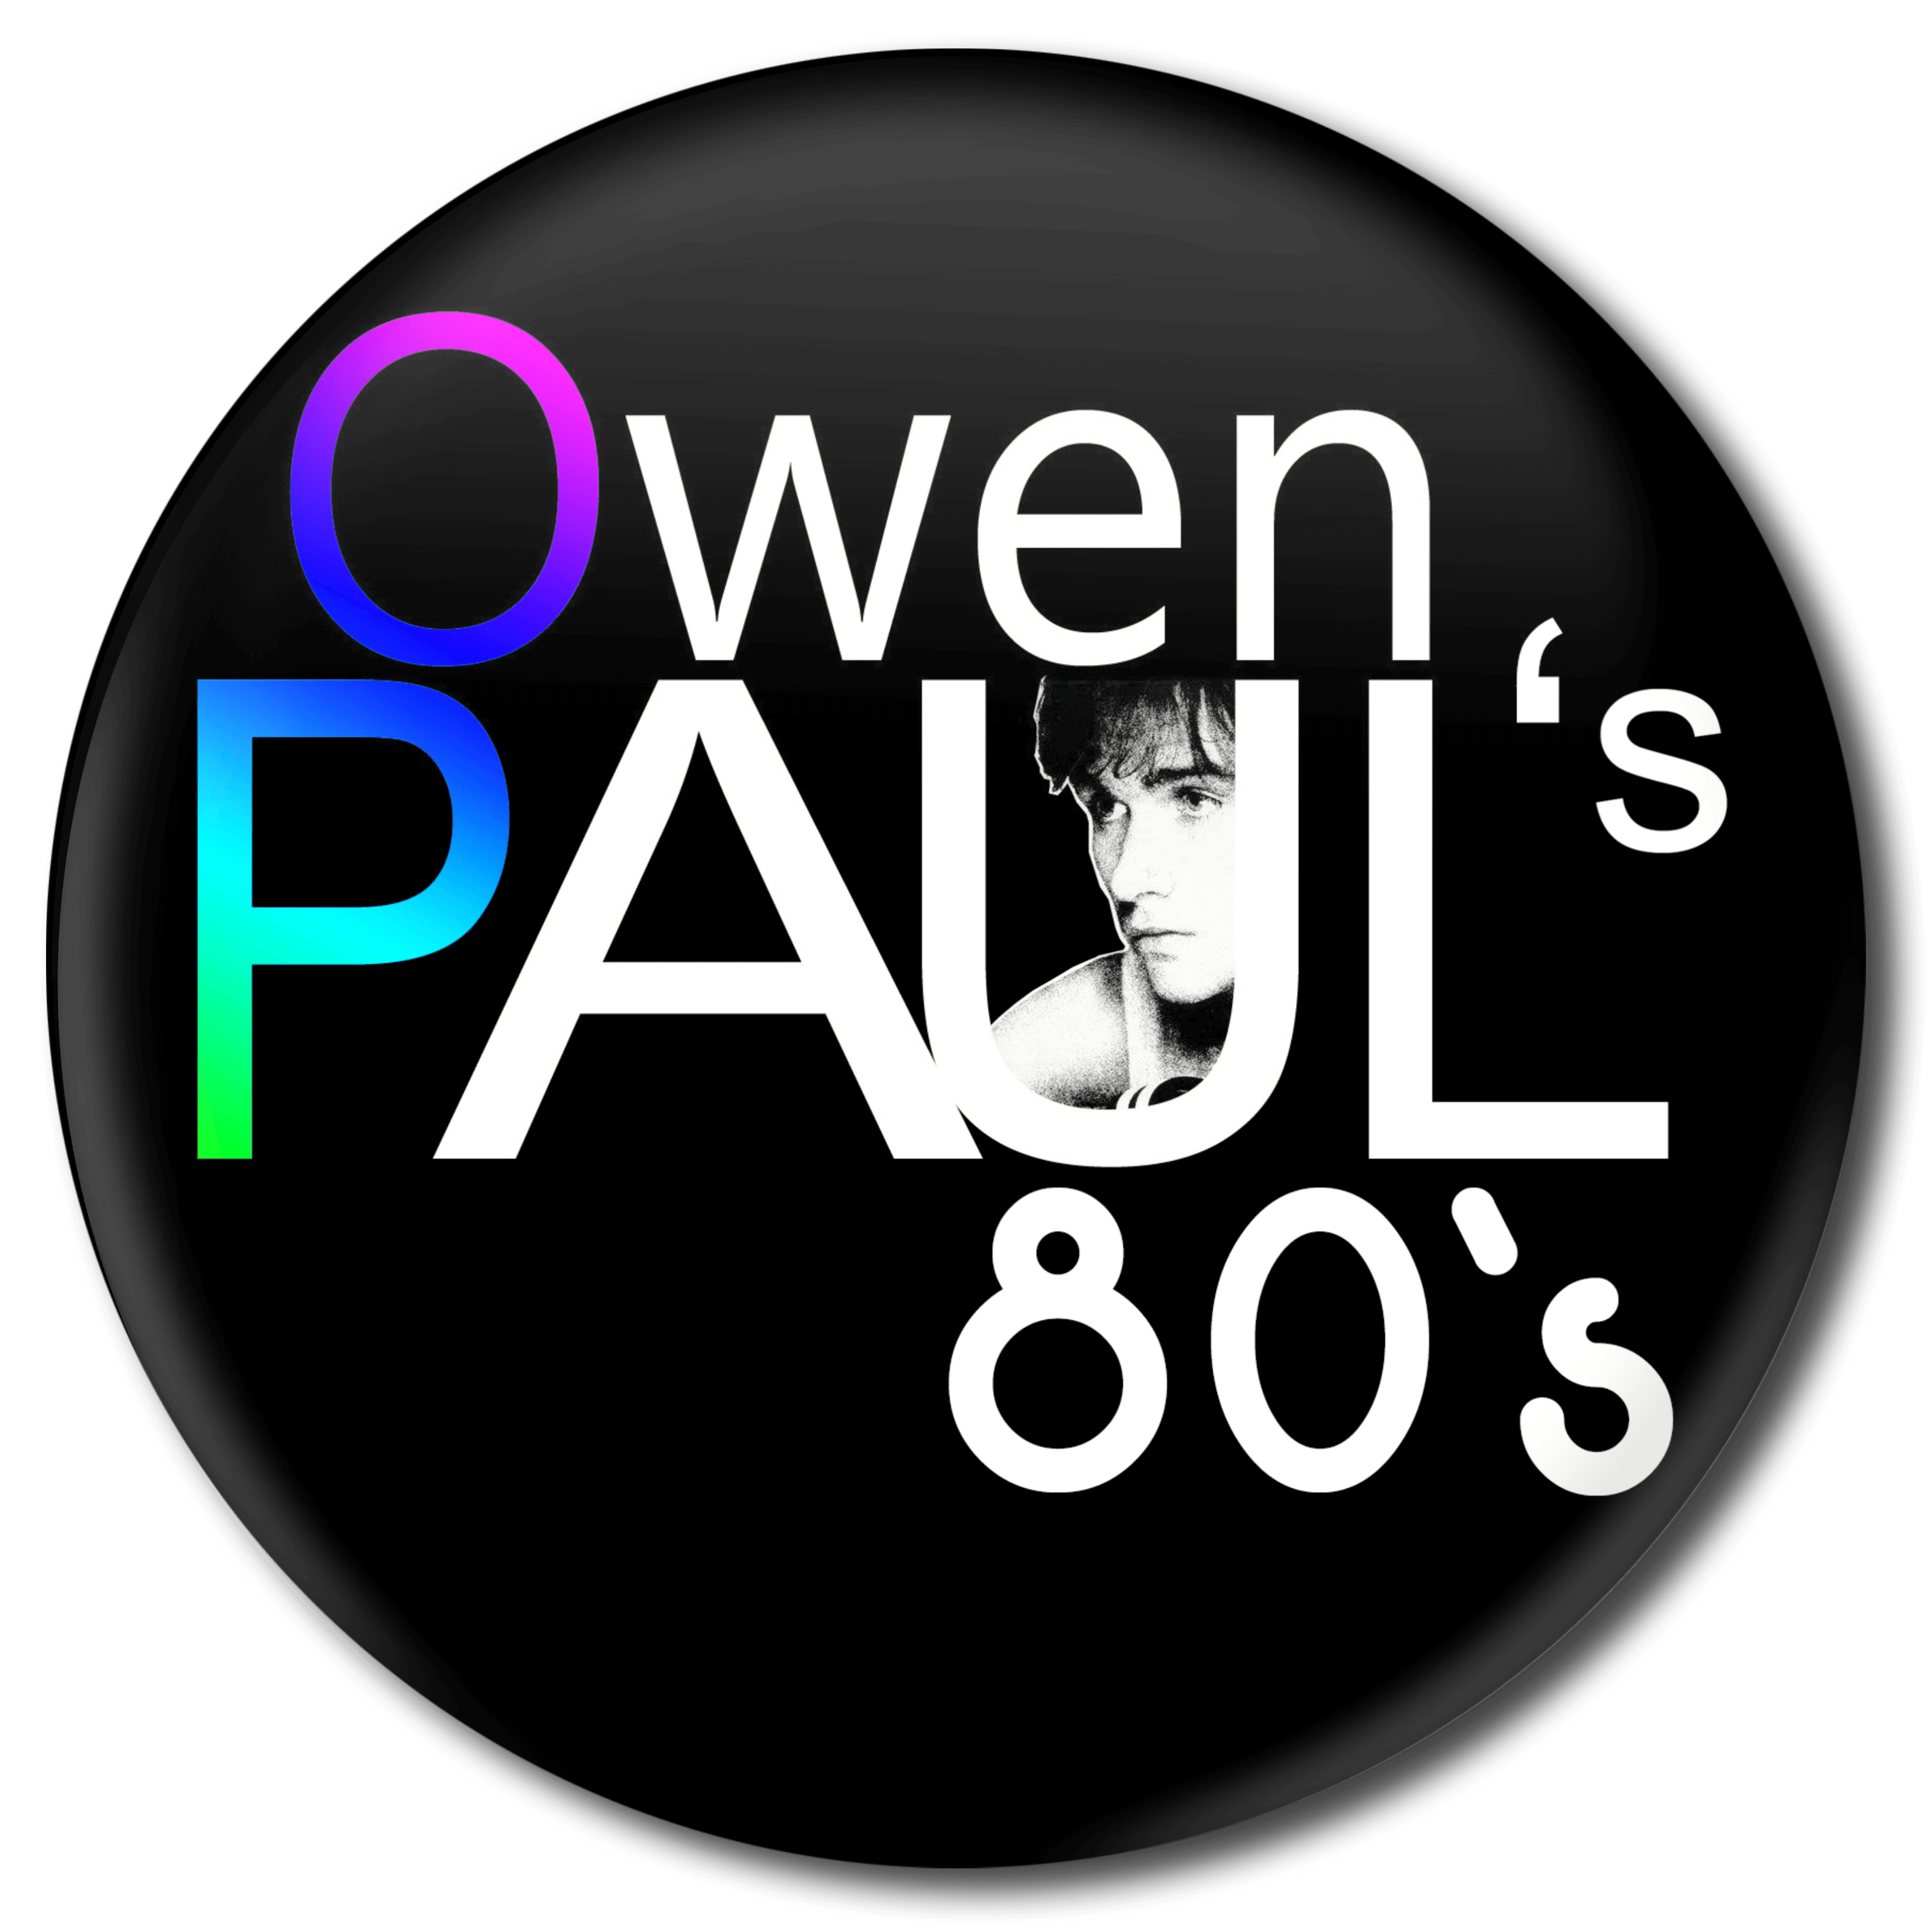 Owen Paul 80s badge